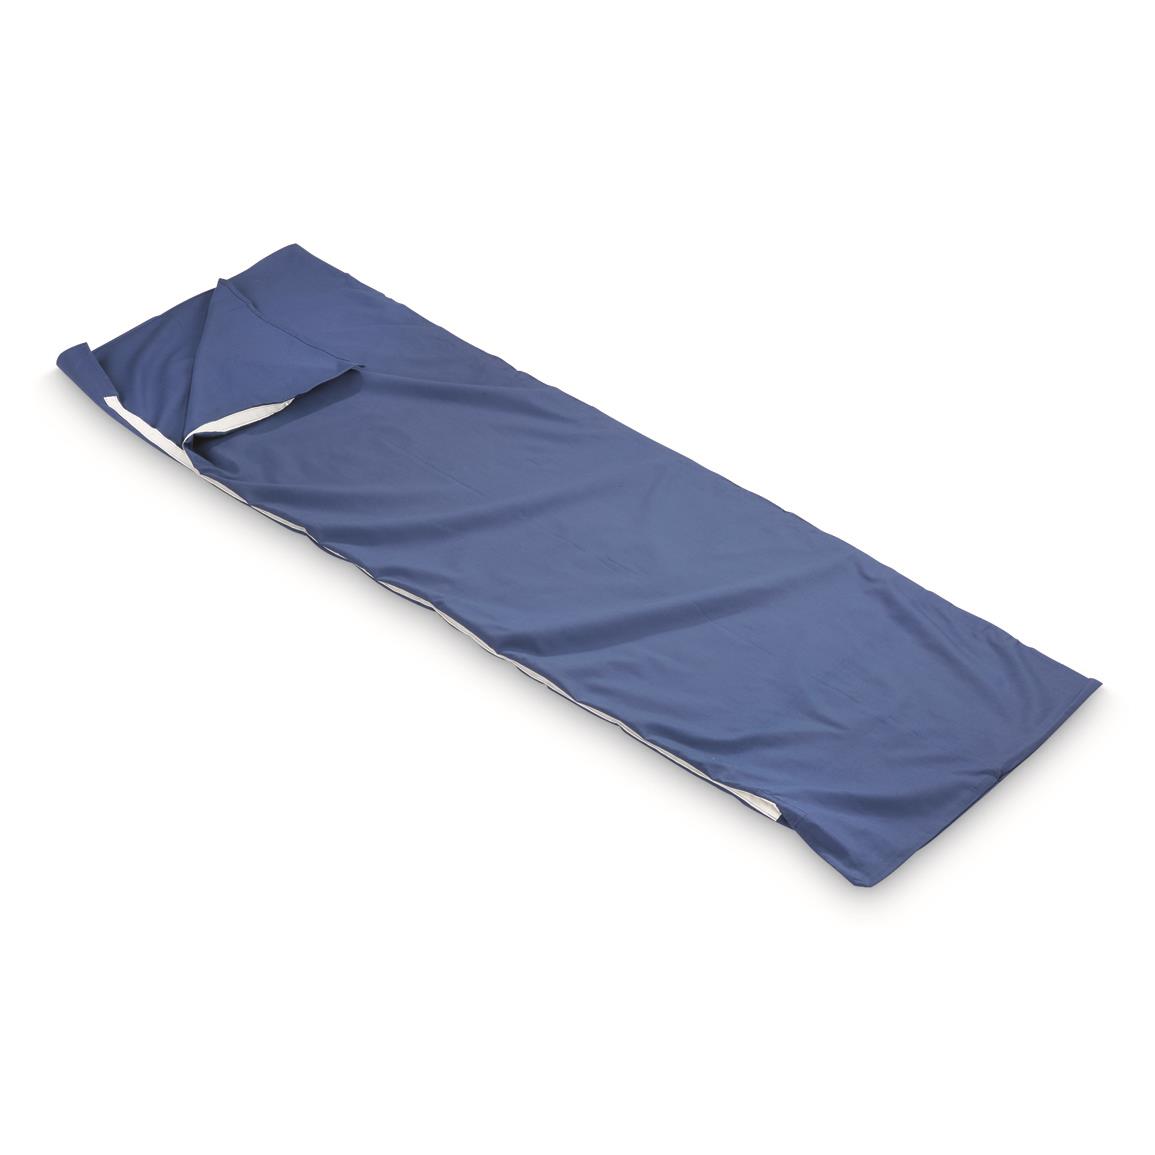 U.S. Navy Surplus Cotton Sleeping Bag Liners, 4 Pack, New, Blue